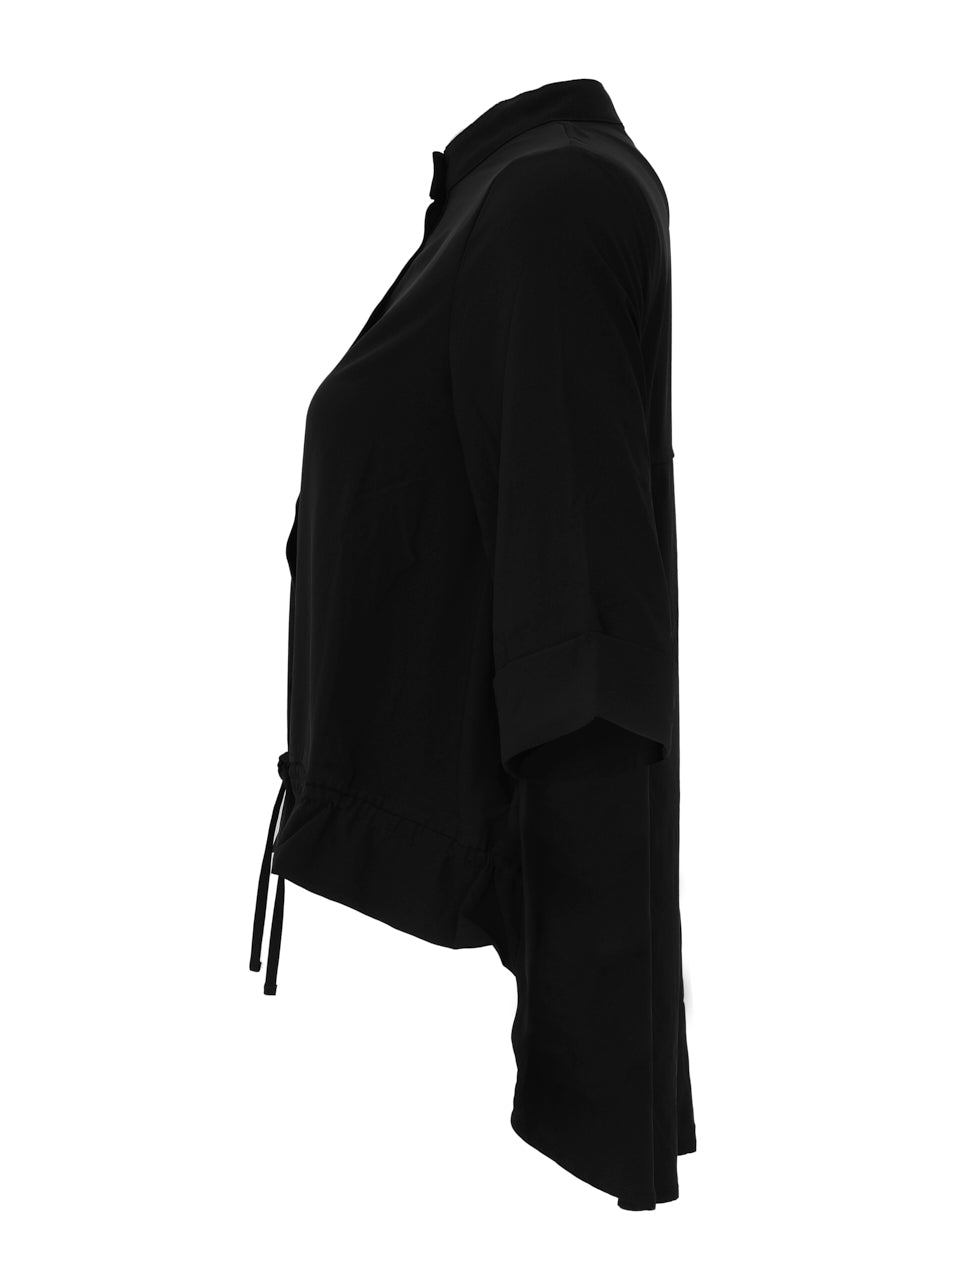 EverSassy Spring 2023 women's casual hi lo tunic blouse with drawstring hem - side